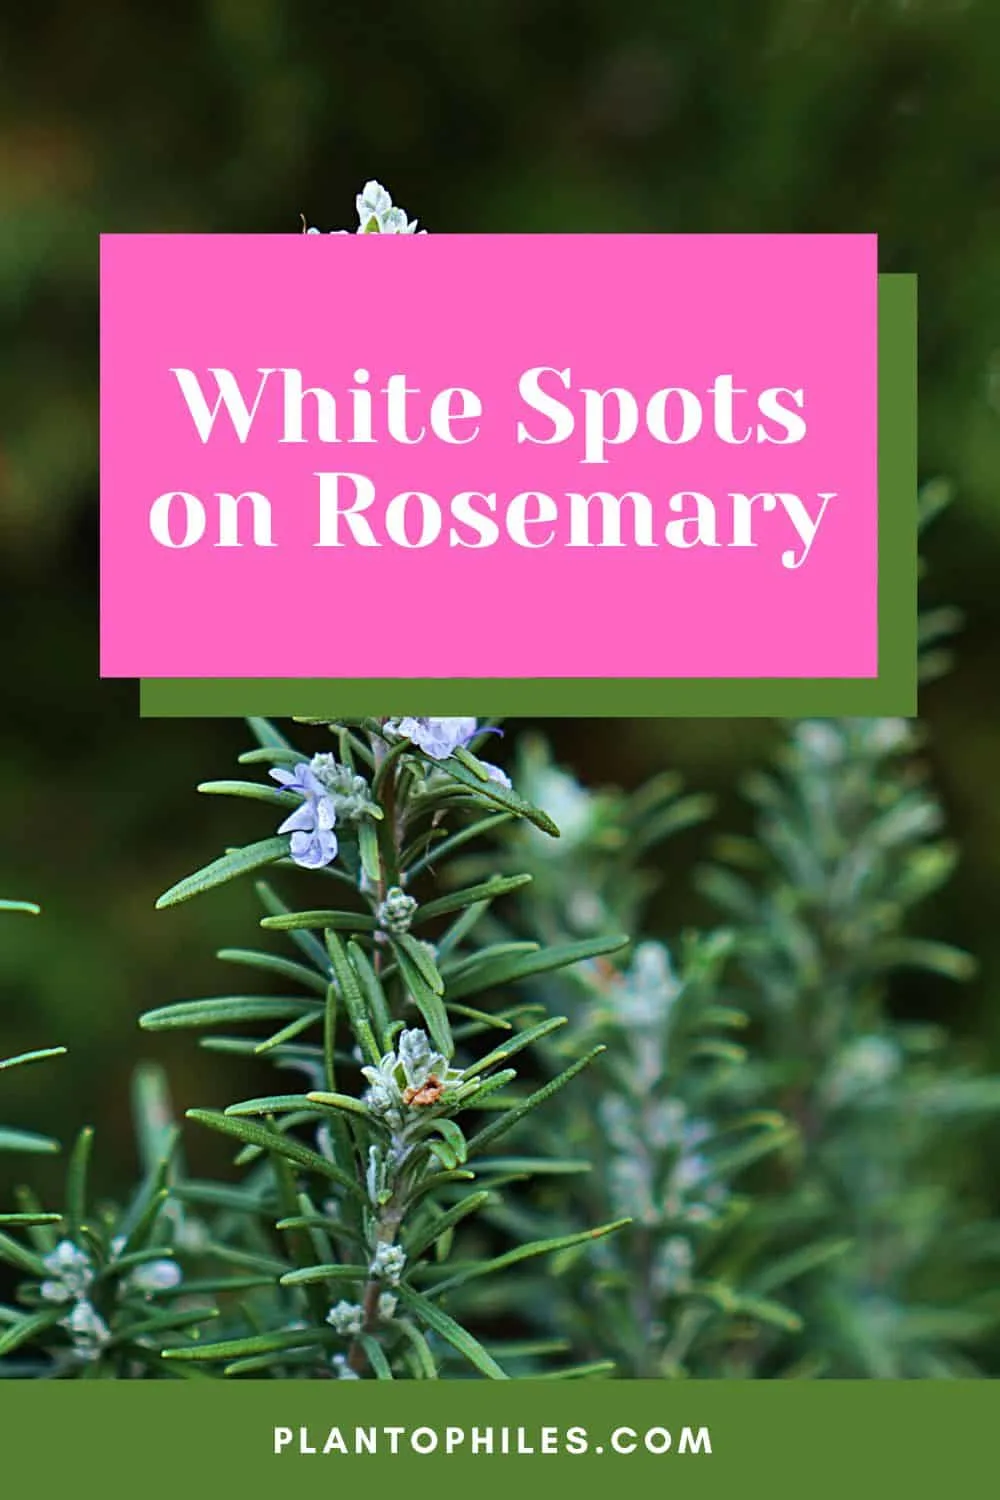 White Spots on Rosemary